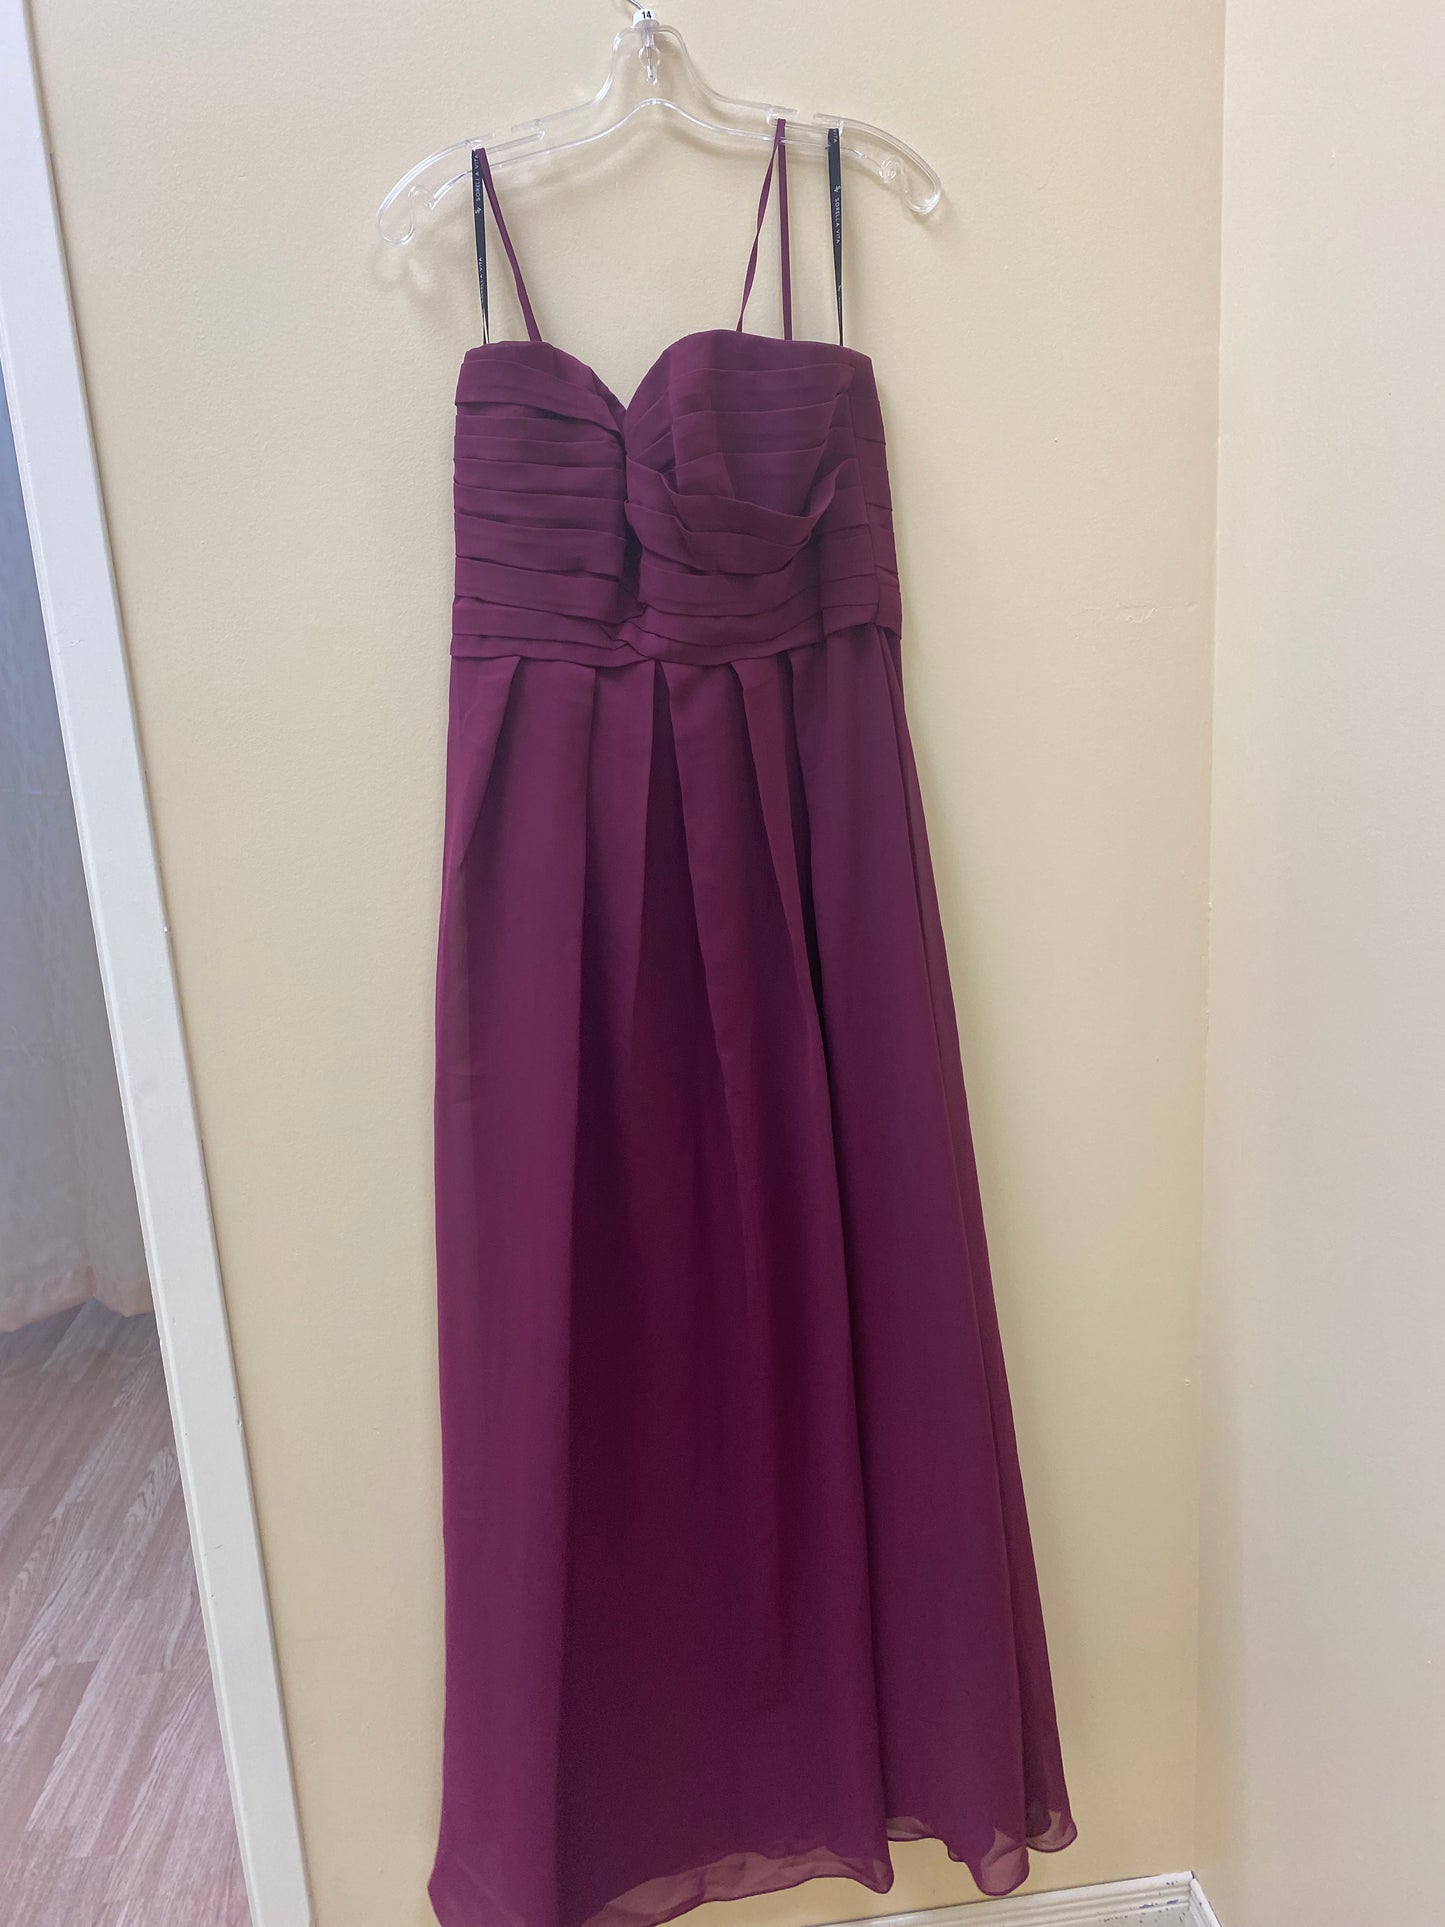 SORELLA VITA - 8405 - Mulberry Size 14 Long Prom / Mother of the Bride / Bridesmaid Dress